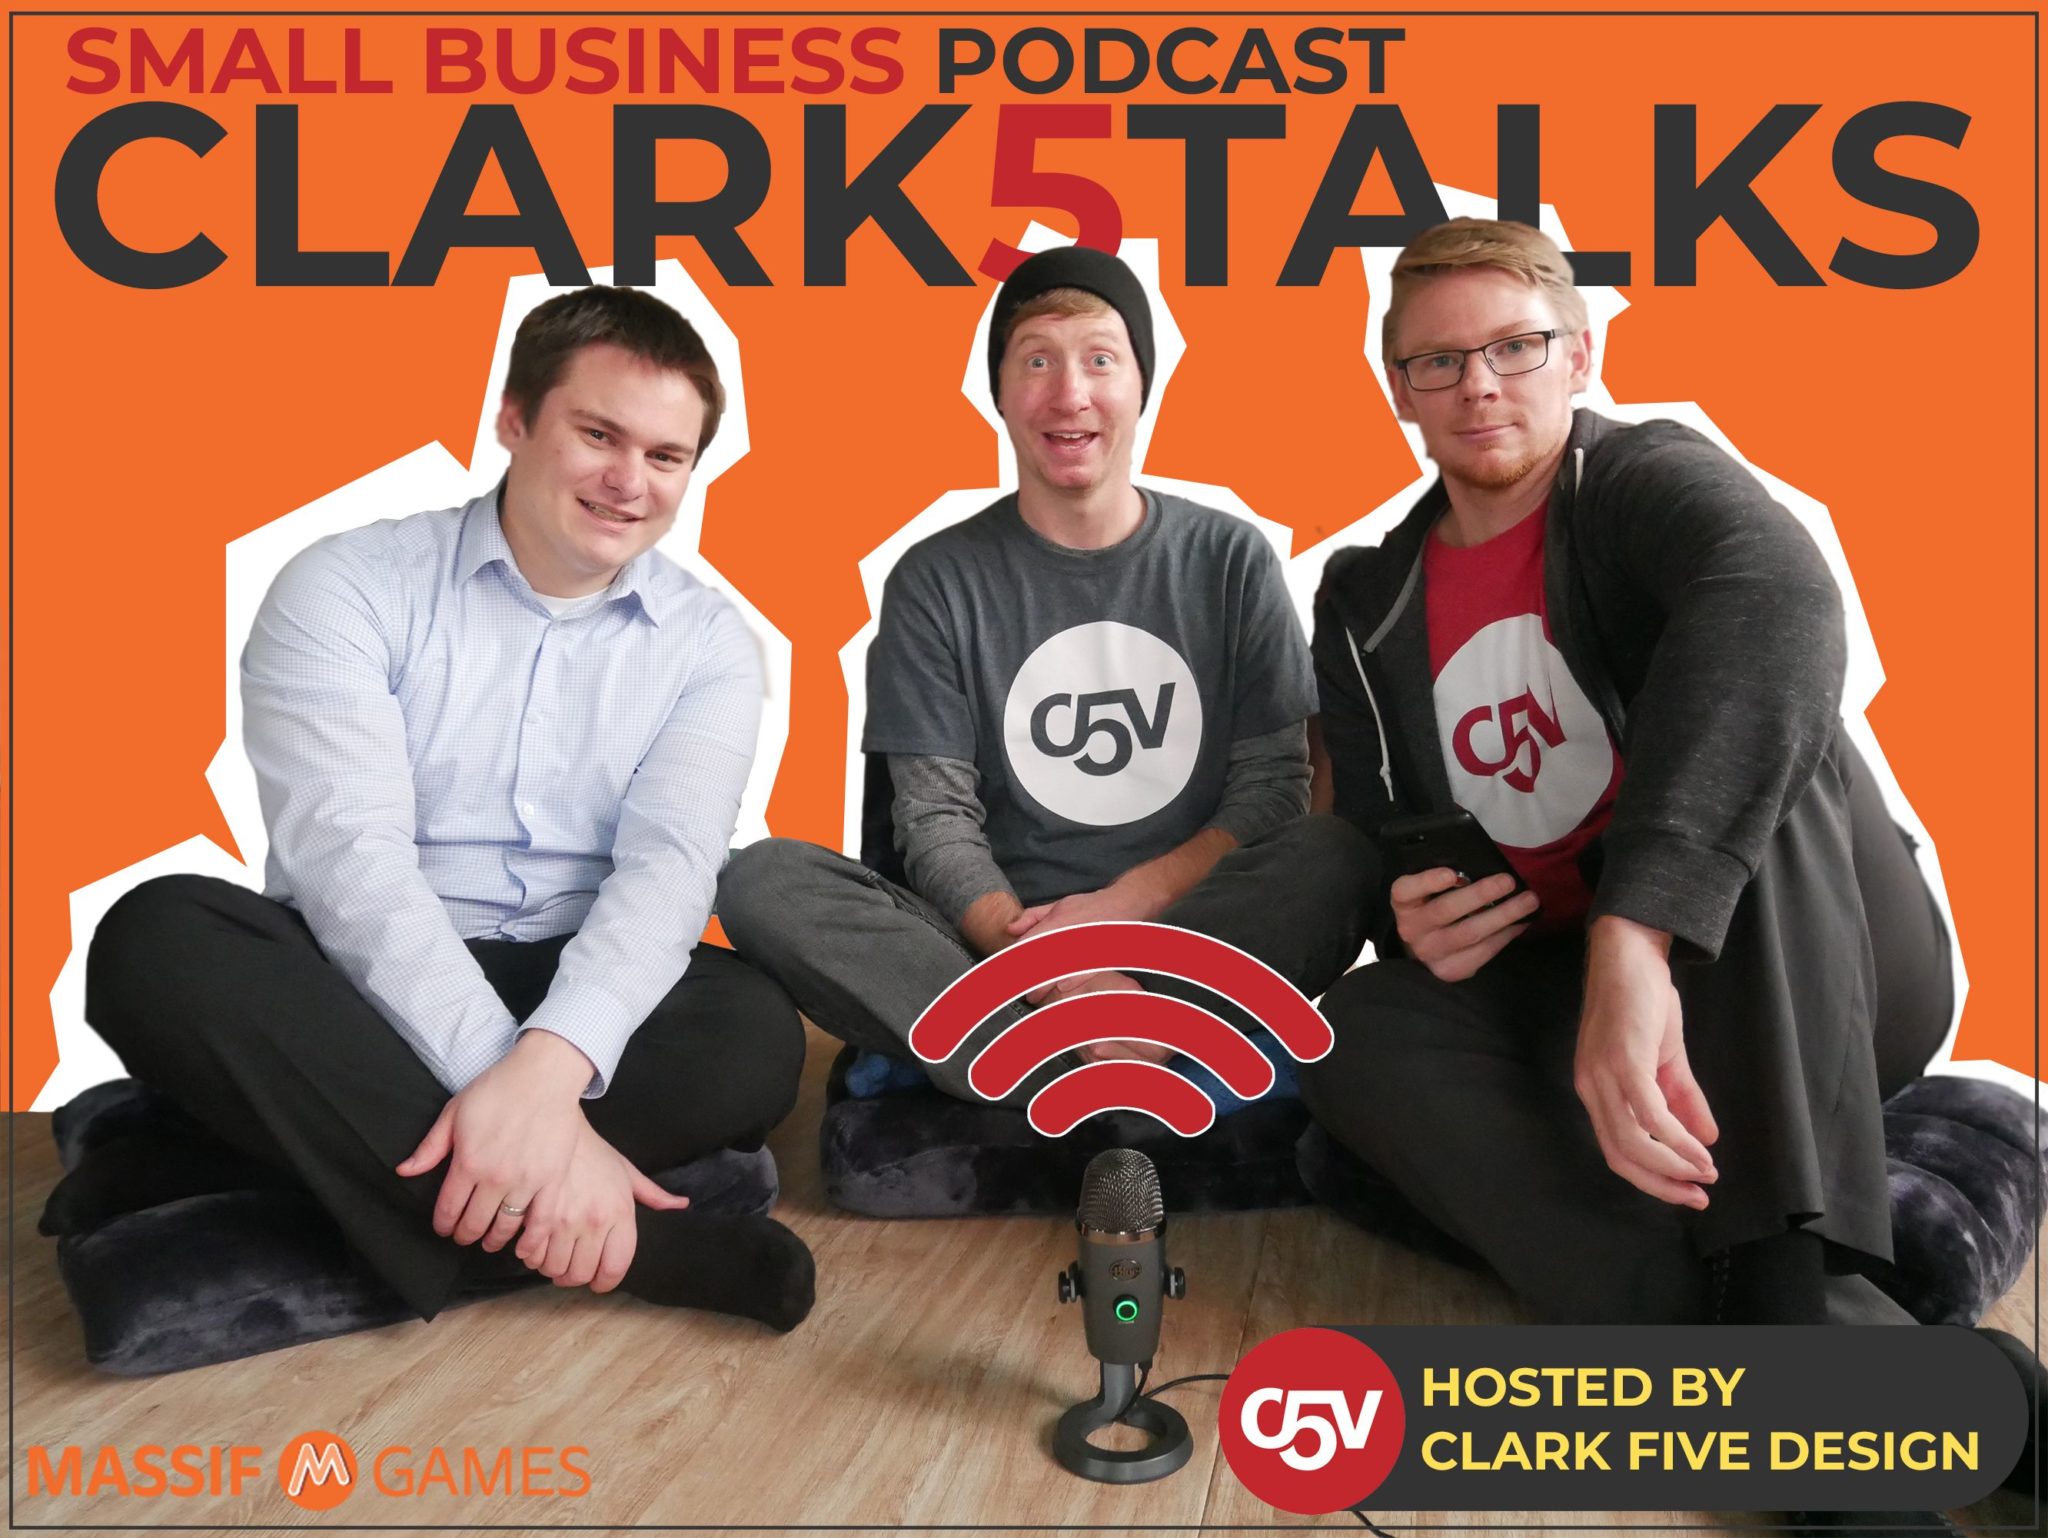 clark five talks podcast episode 2 cover image